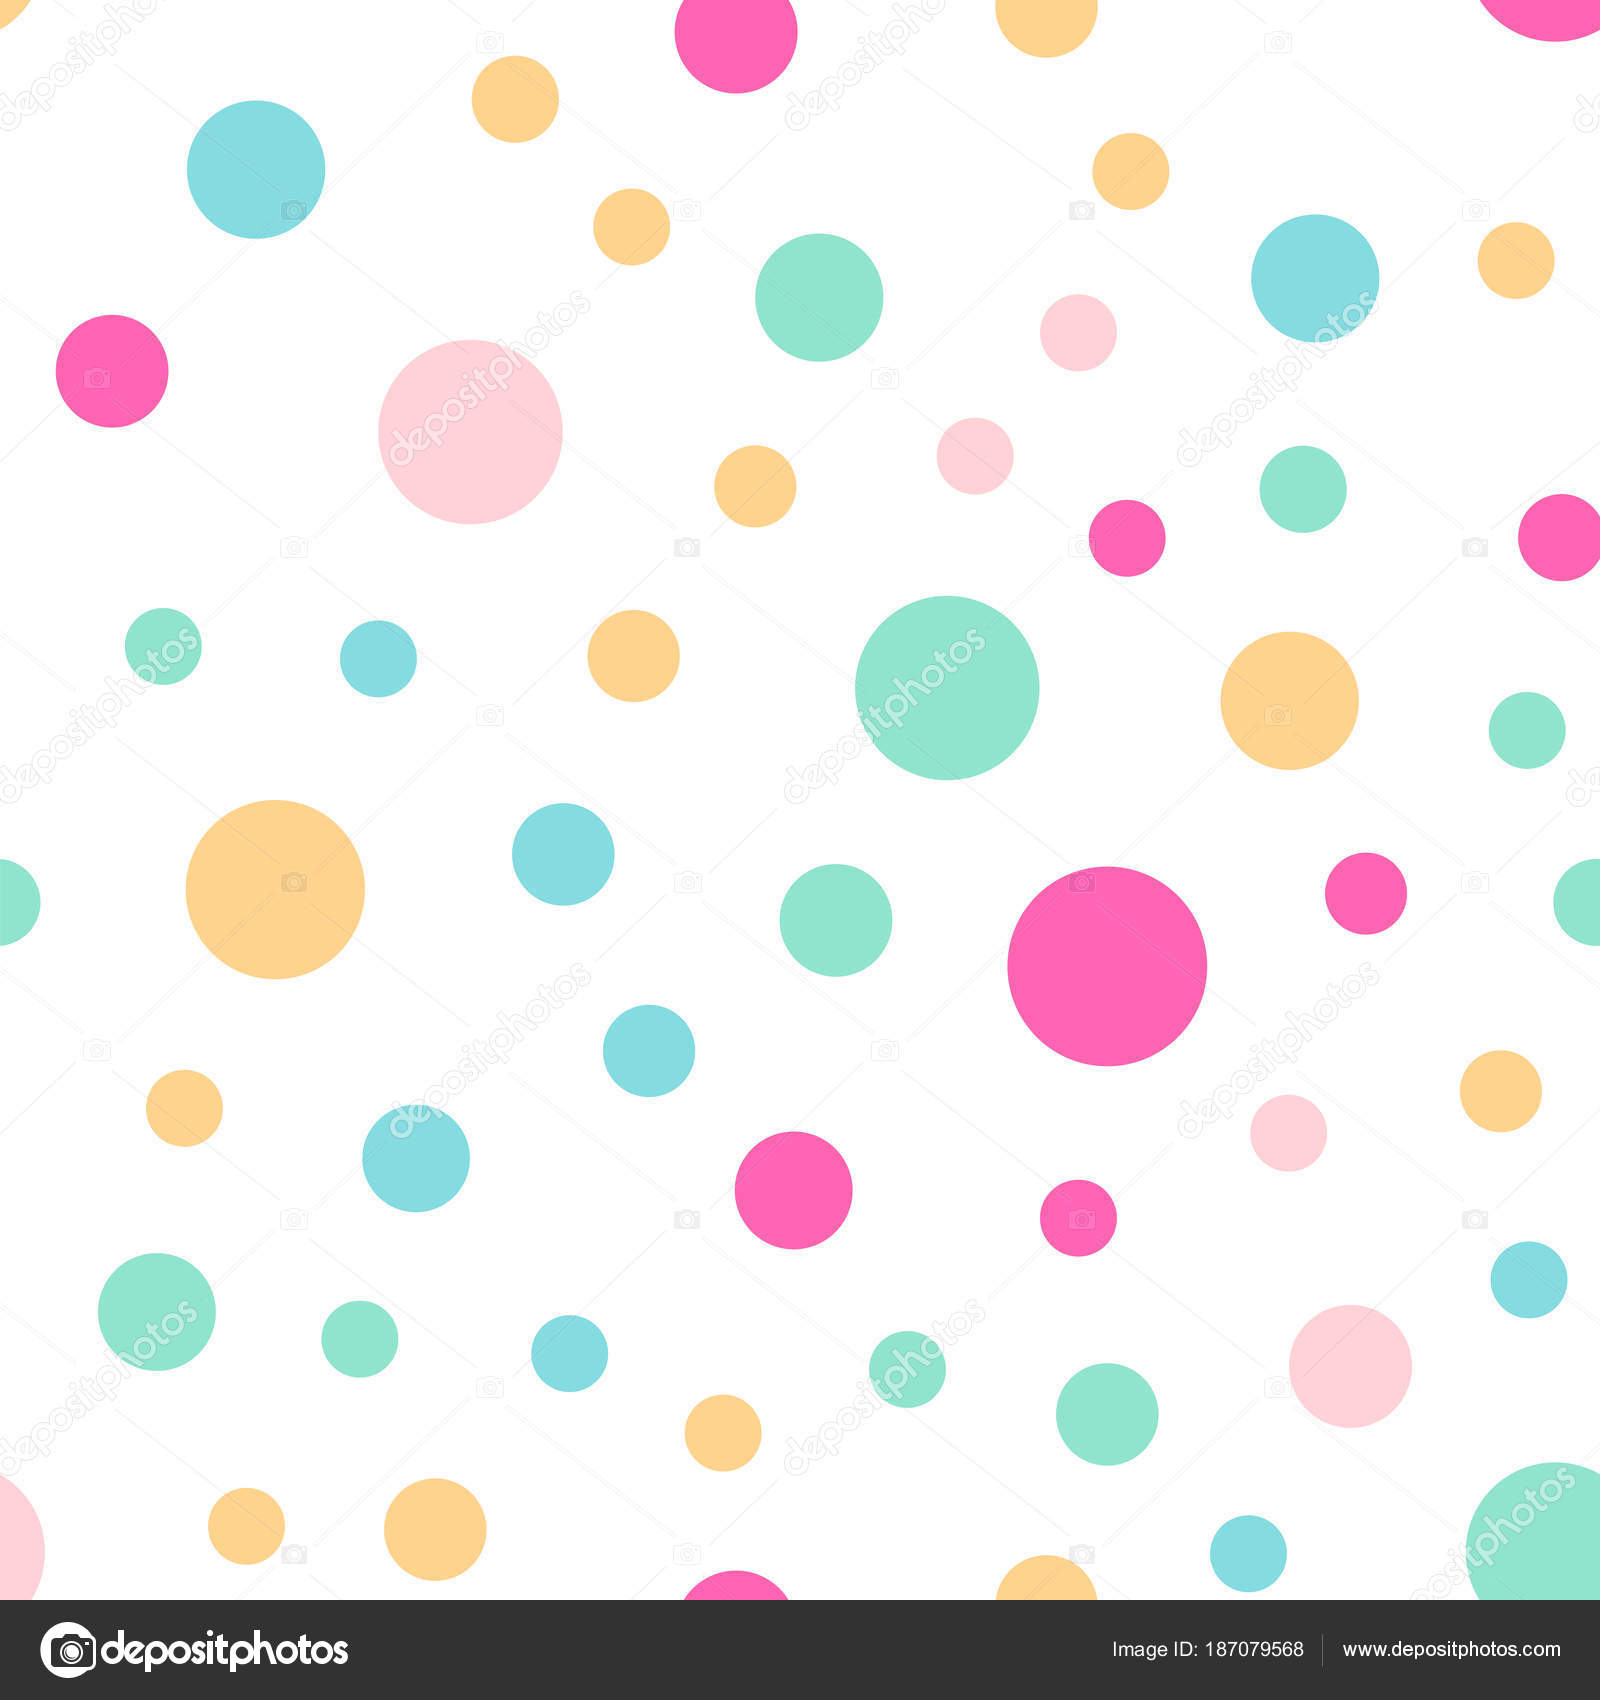 https://st3.depositphotos.com/7668048/18707/v/1600/depositphotos_187079568-stock-illustration-colorful-polka-dots-seamless-pattern.jpg